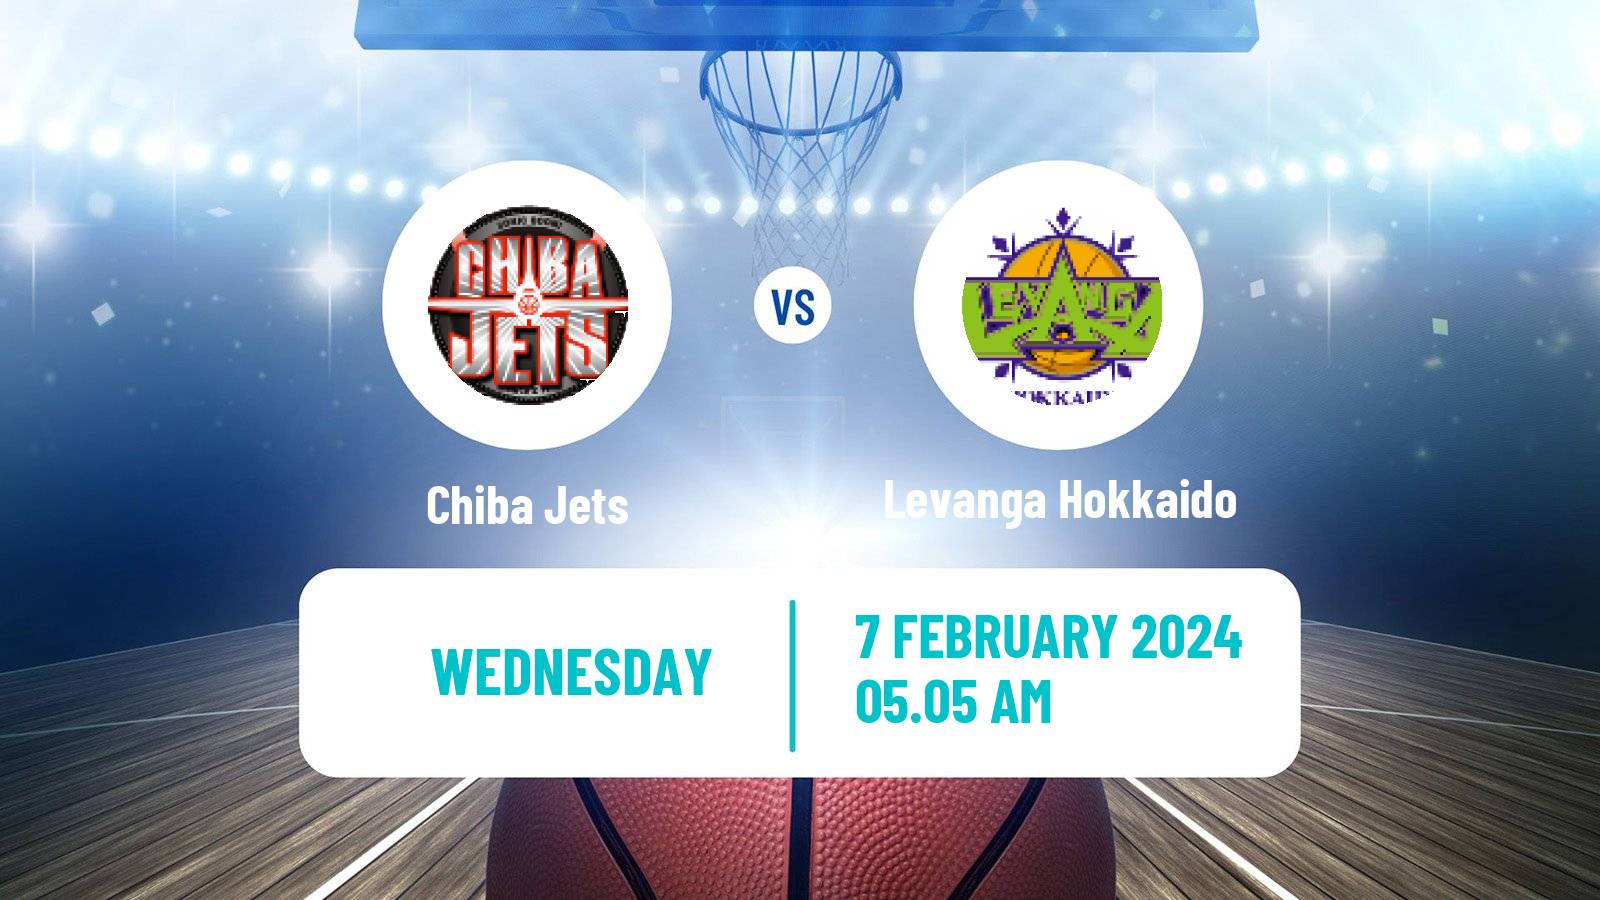 Basketball BJ League Chiba Jets - Levanga Hokkaido